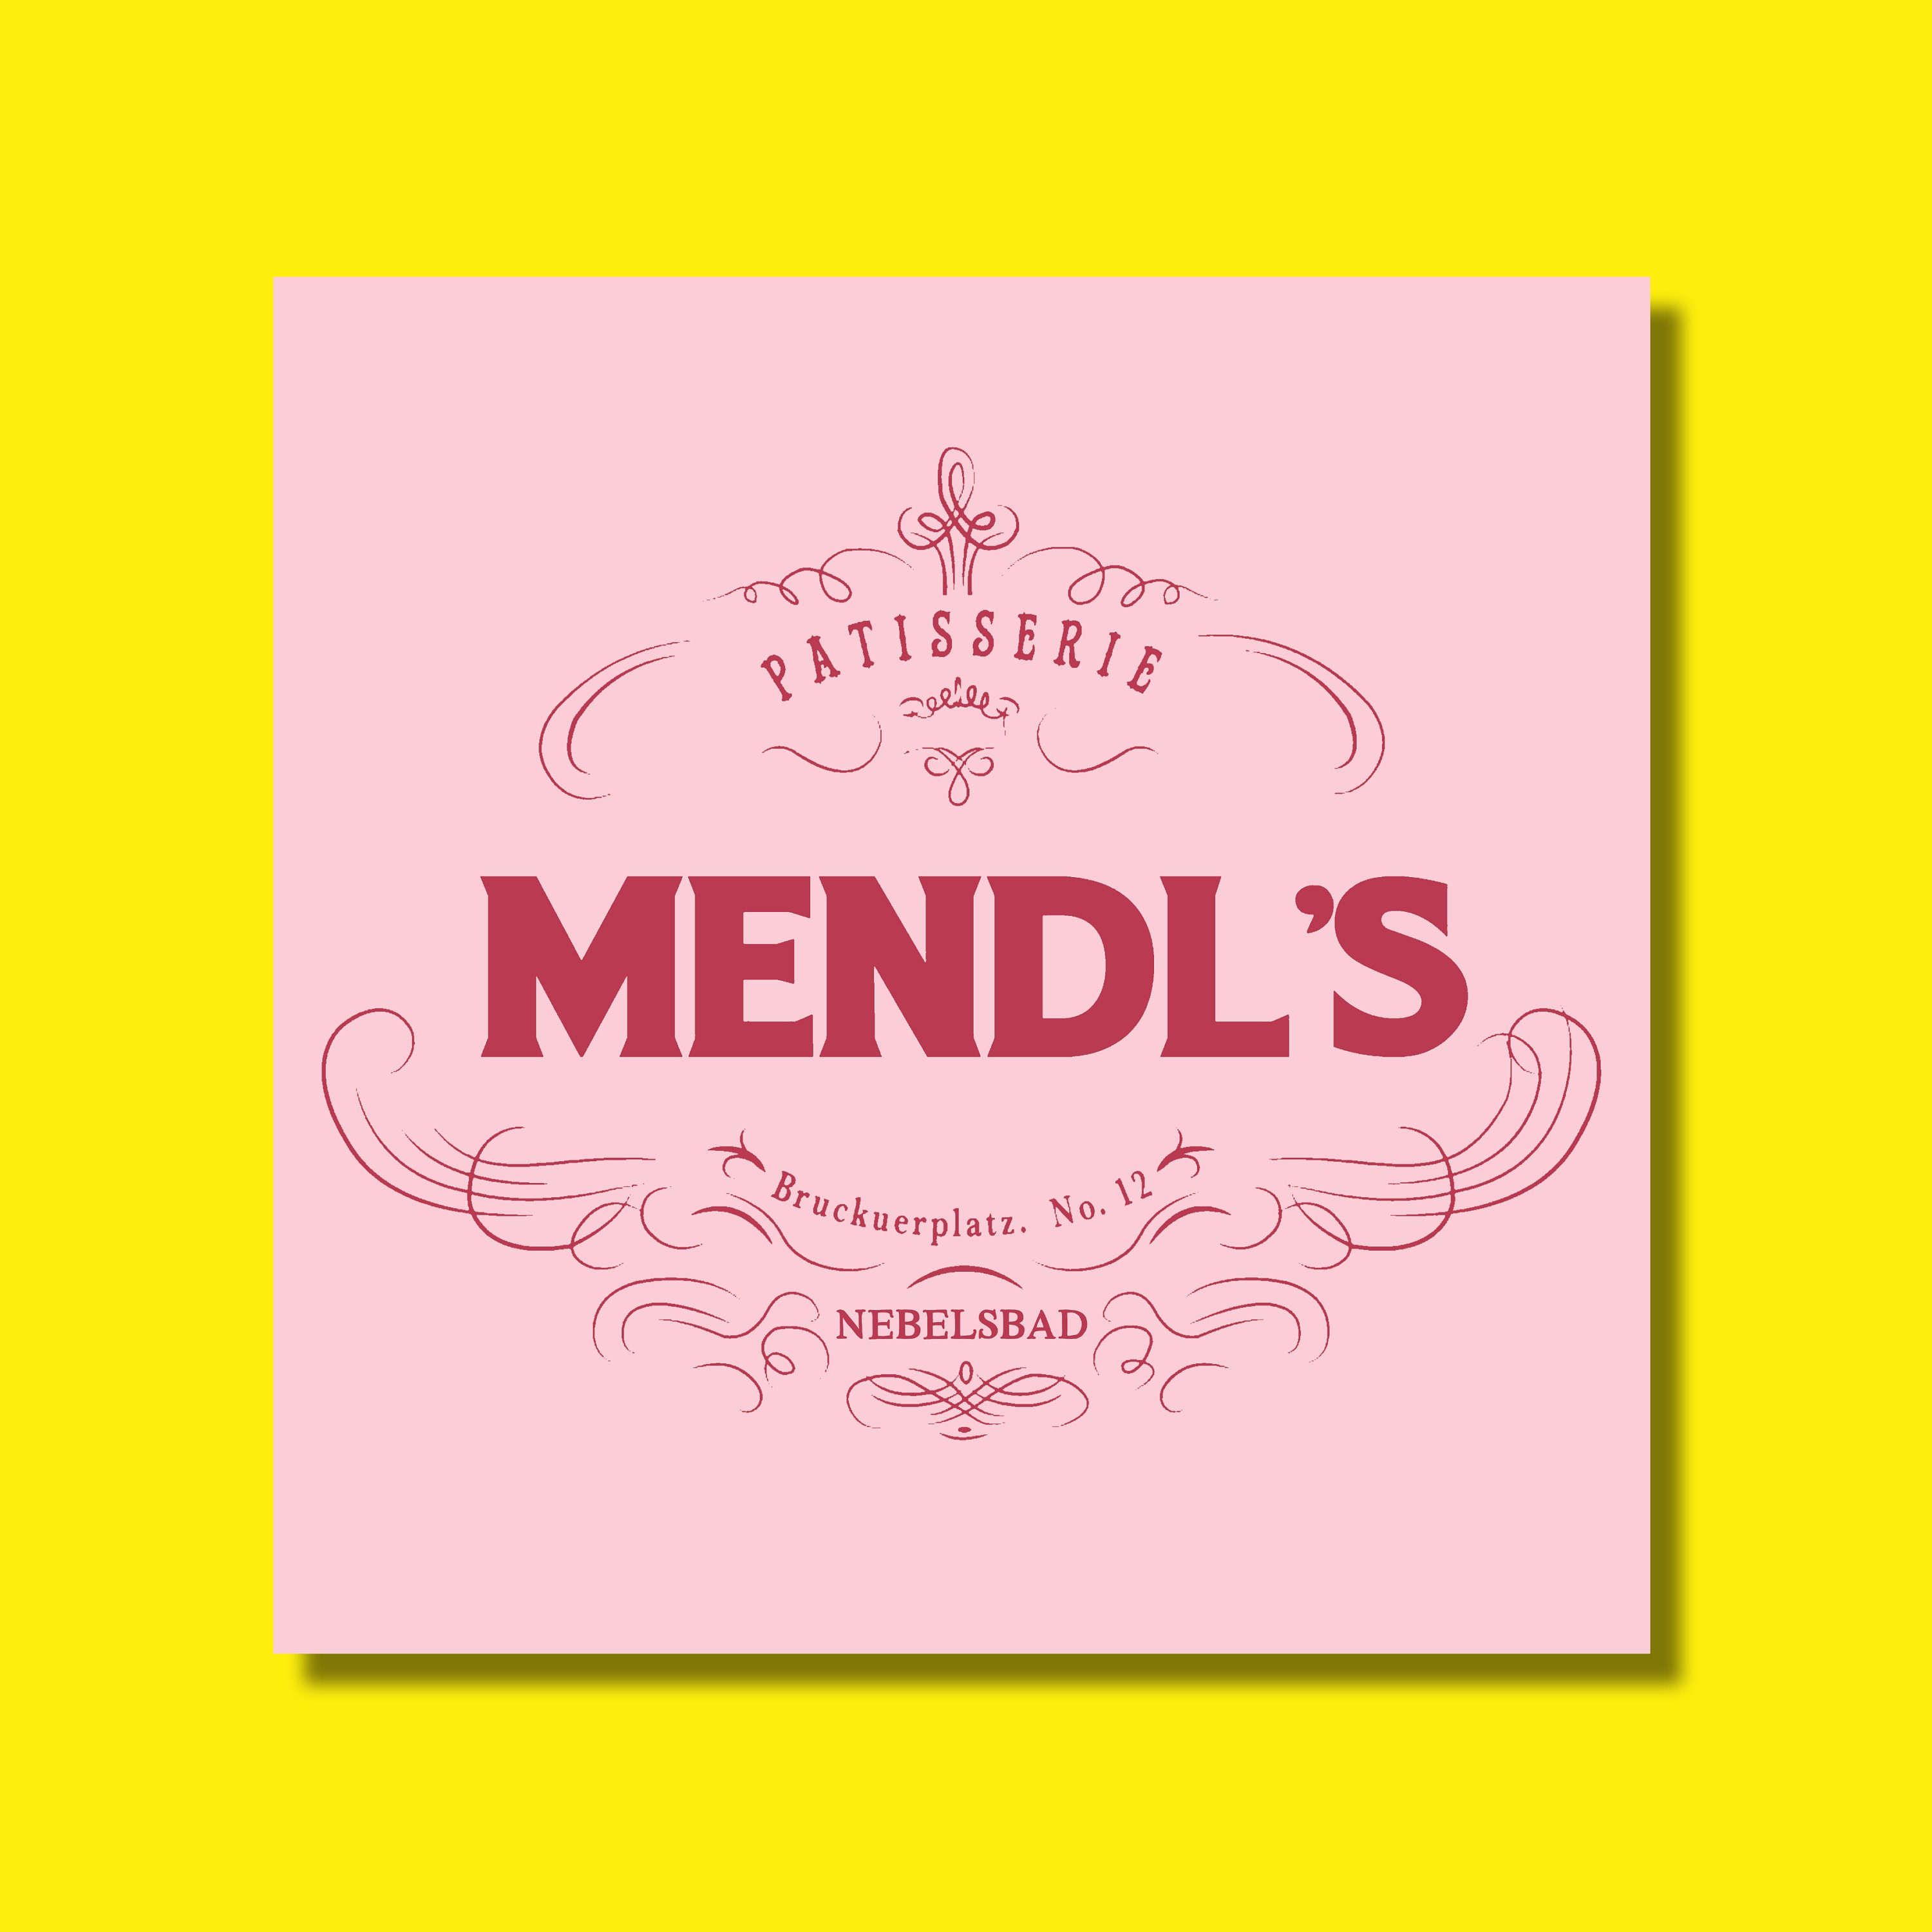 Mendls Pastry Box (Grand Budapest Hotel) | Sticker